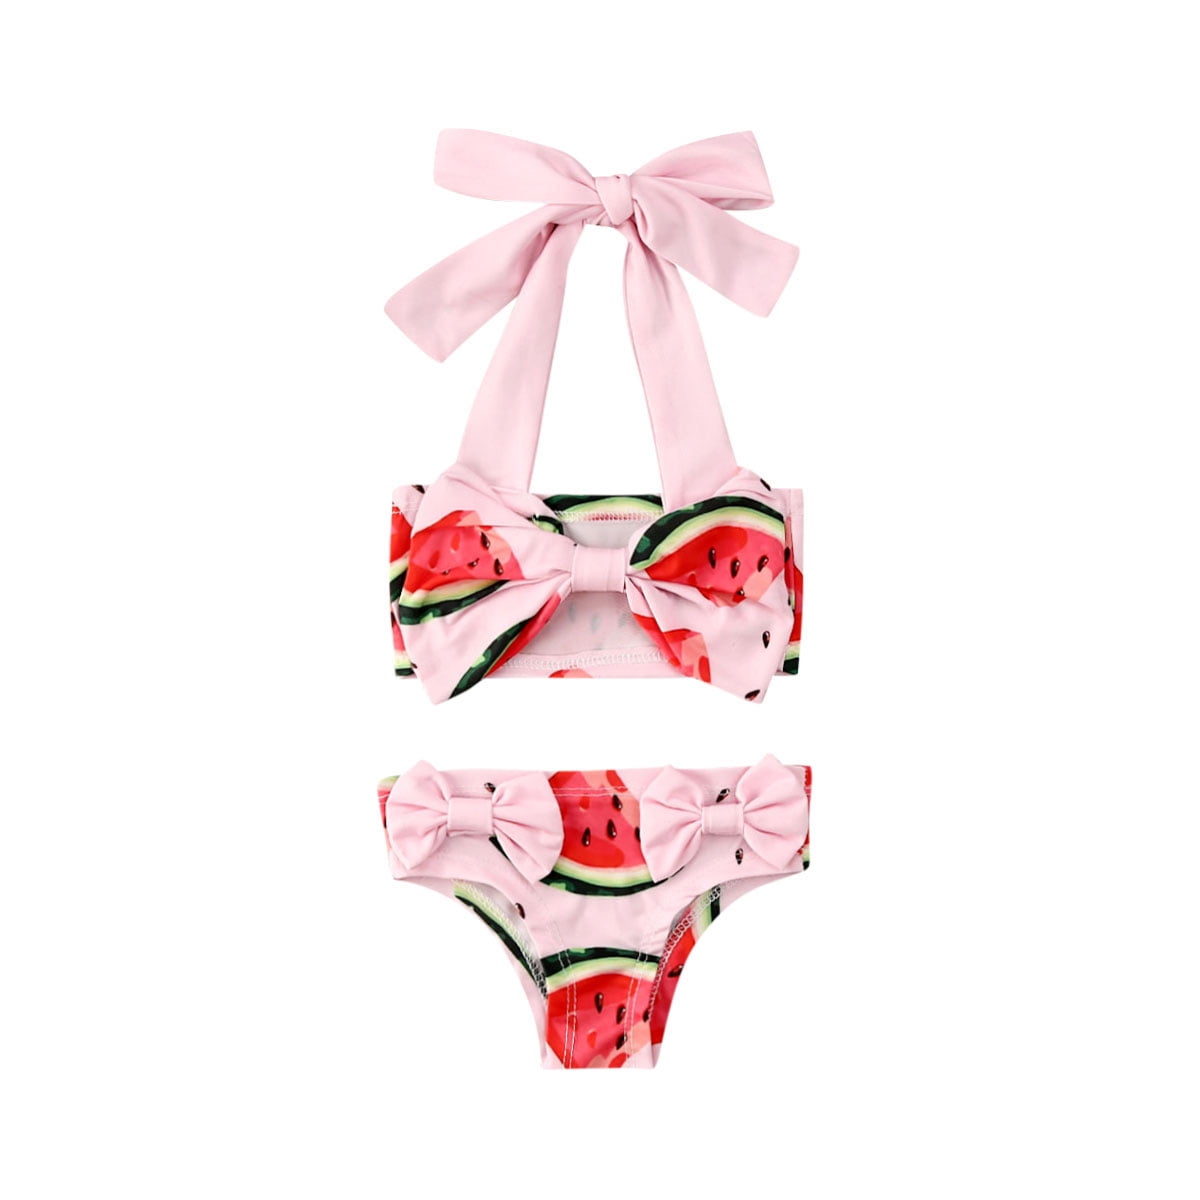 Cuekondy Toddler Kids Baby Girl Watermelon Lemon Print Bikini Swimsuit Set Halter Swimwear Tops+Shorts Bathing Suit 2pc